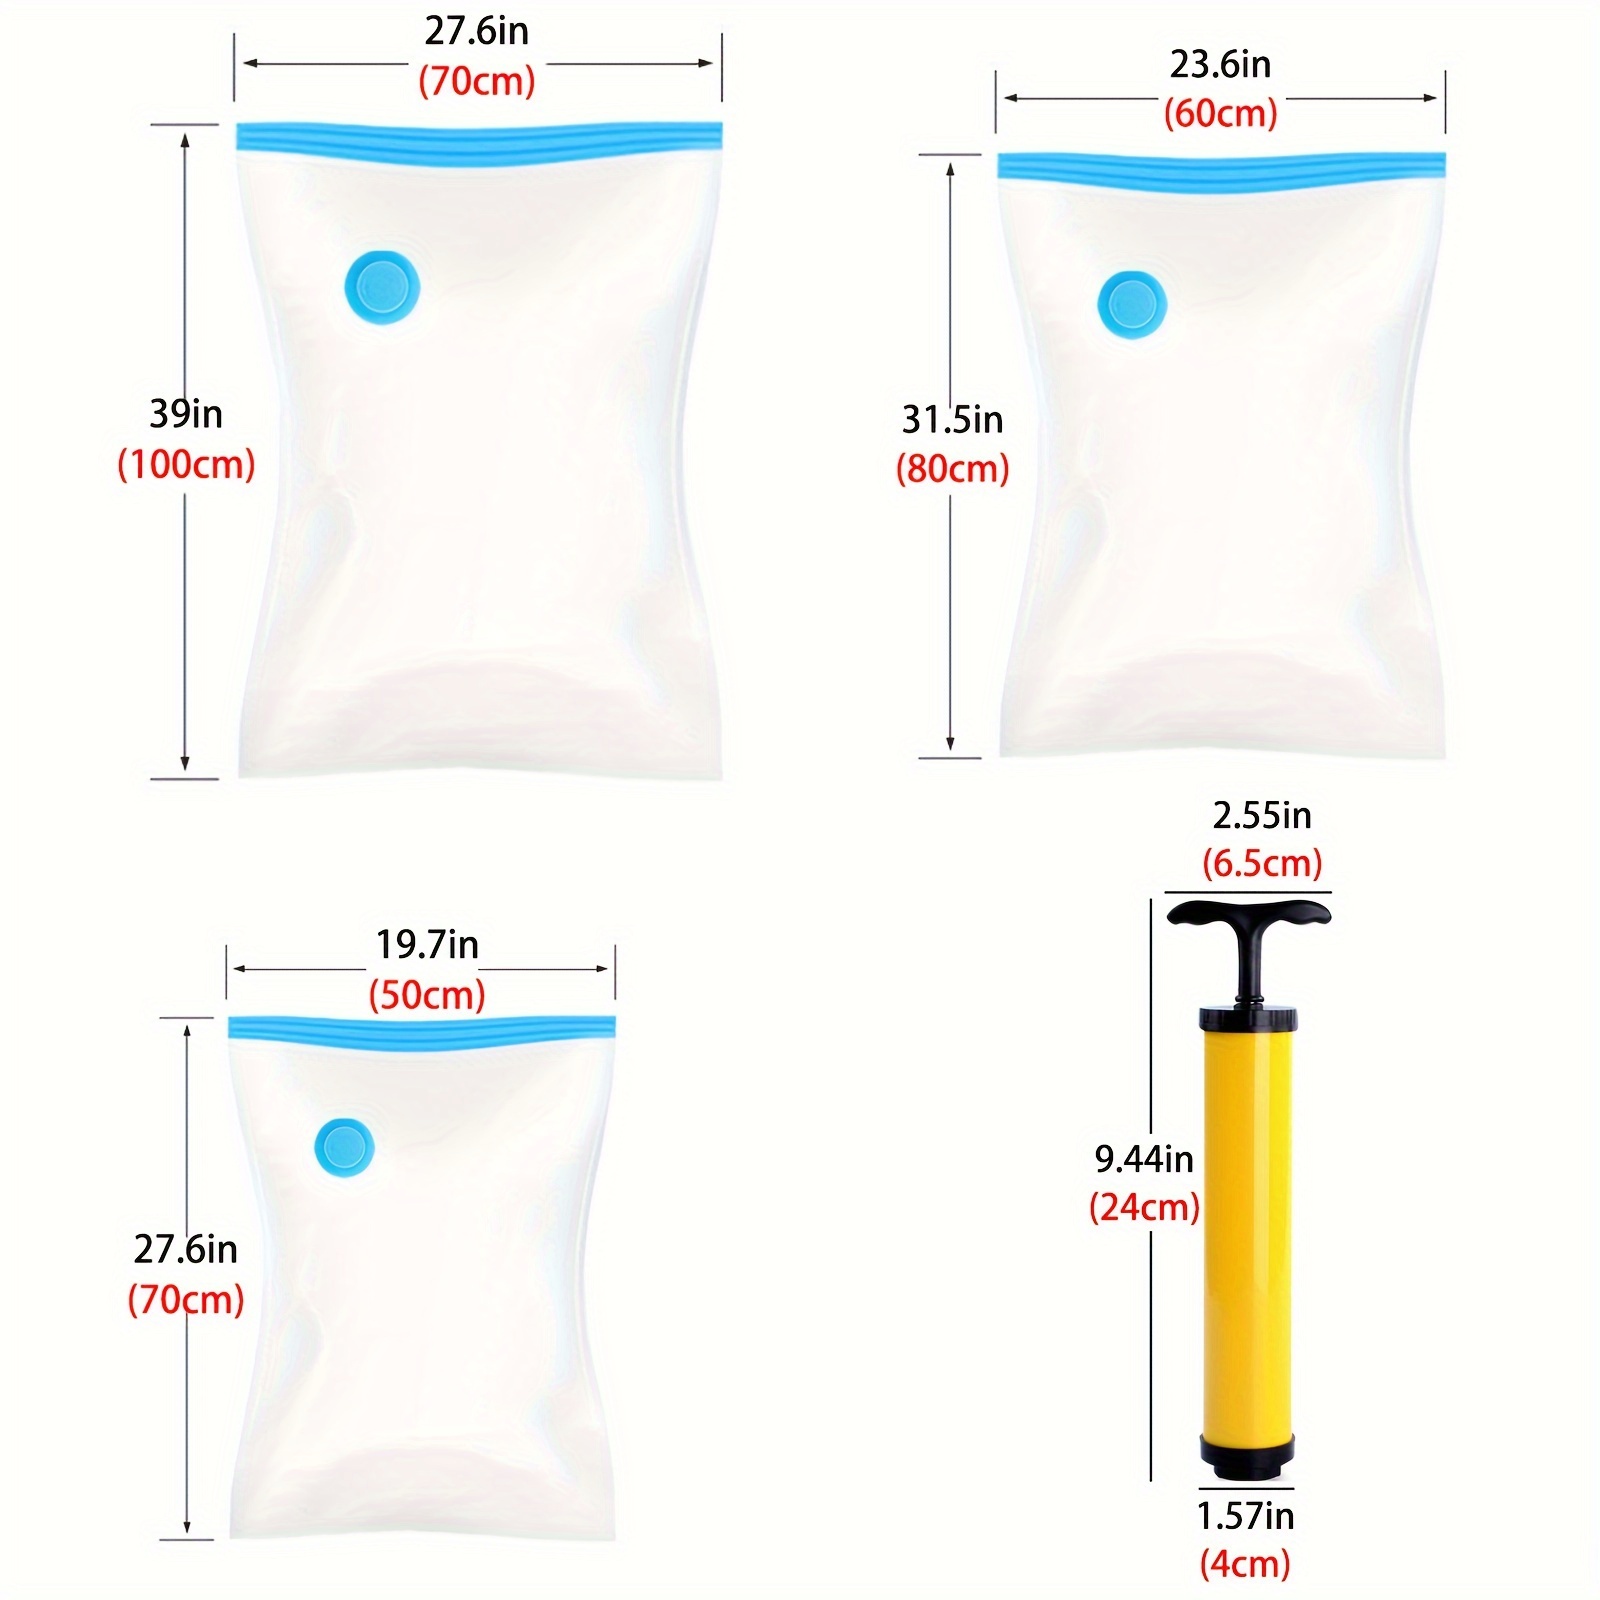 Spacesaver Premium Vacuum Storage Bags -80% More Storage! Hand-Pump for  Travel! Double-Zip Seal and Triple Seal Valve! Vacuum Sealer Bags for  Comforters, Blankets, Bedding, Clothing! (Jumbo, 3 pack) 